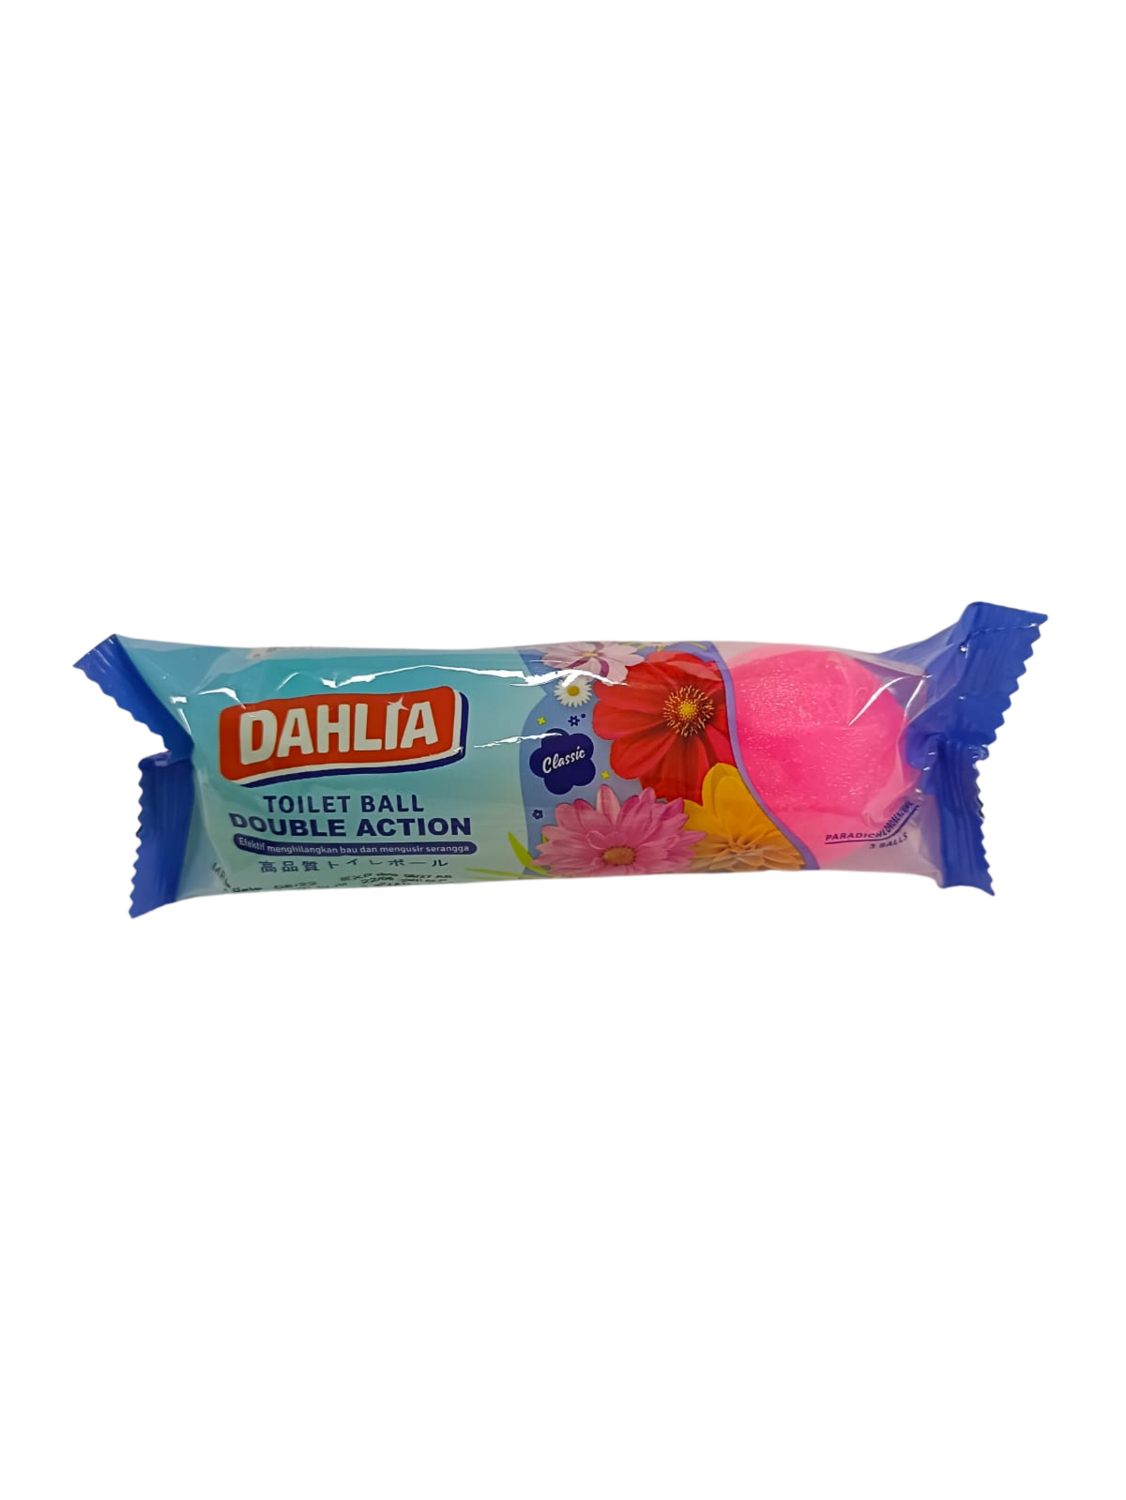 Dahlia Toilet Ball Double Action 120g